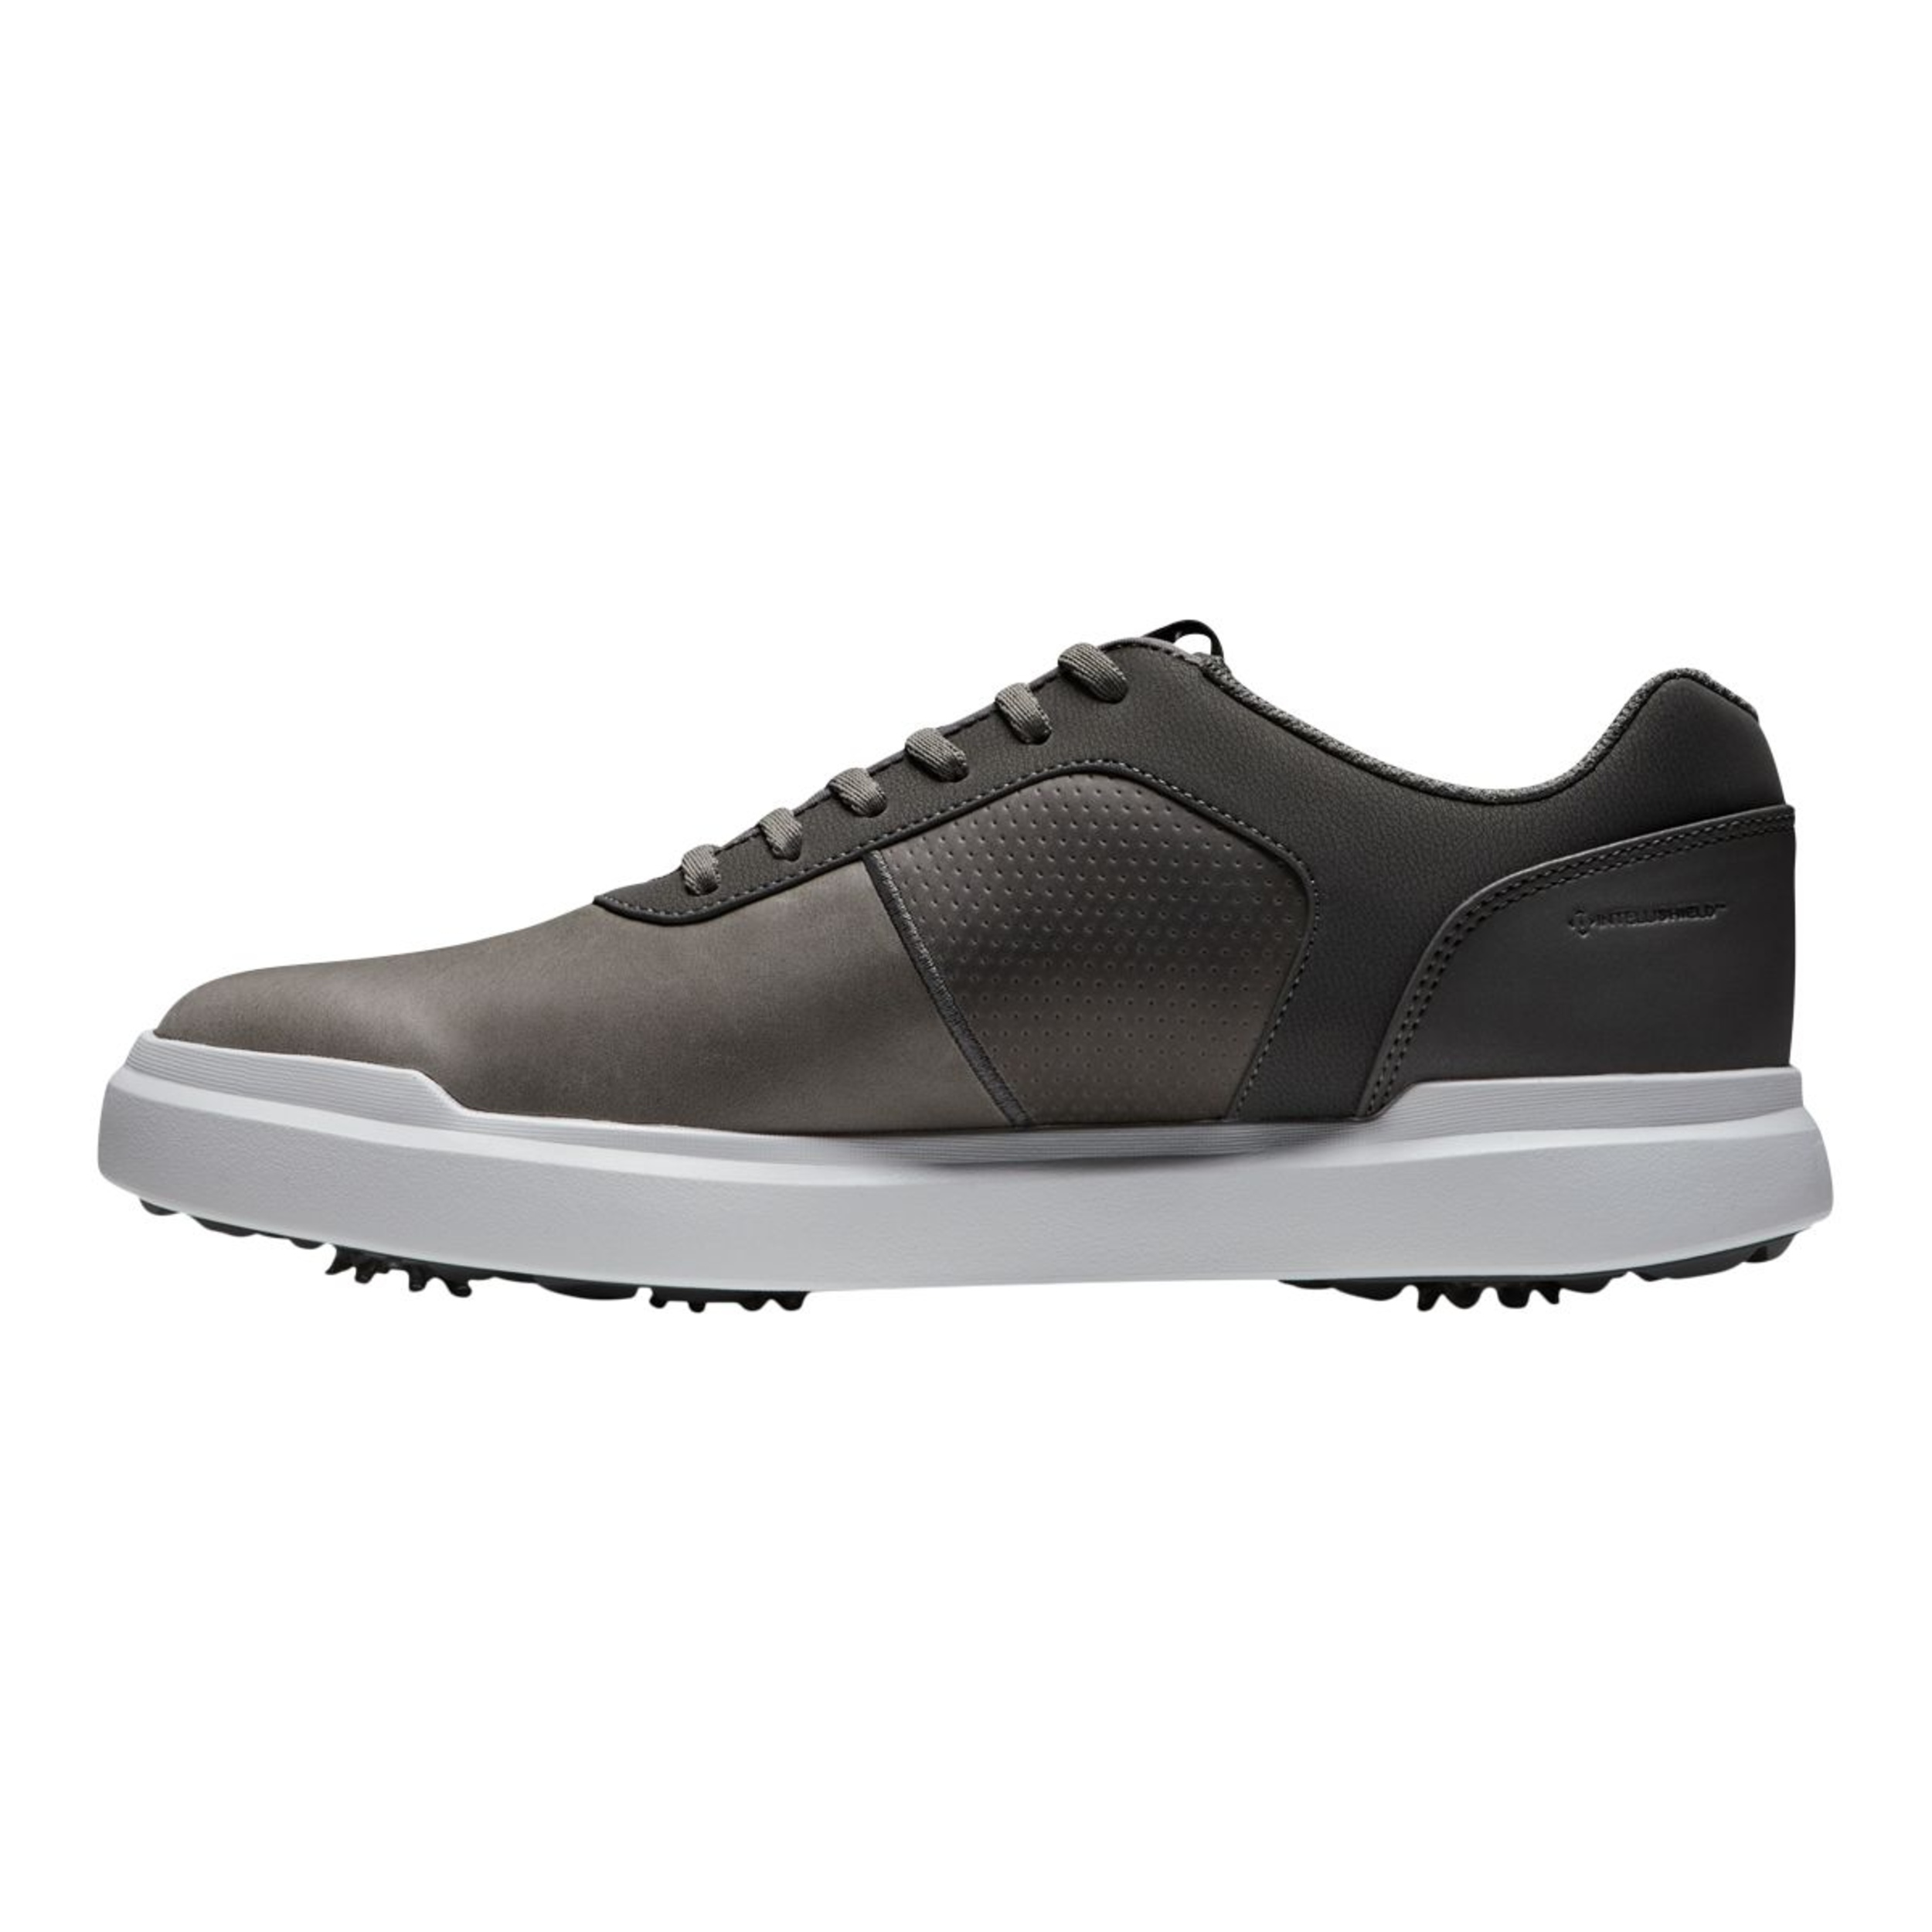 Footjoy Men's Contour Series Golf Shoes, Spiked, Waterproof | SportChek